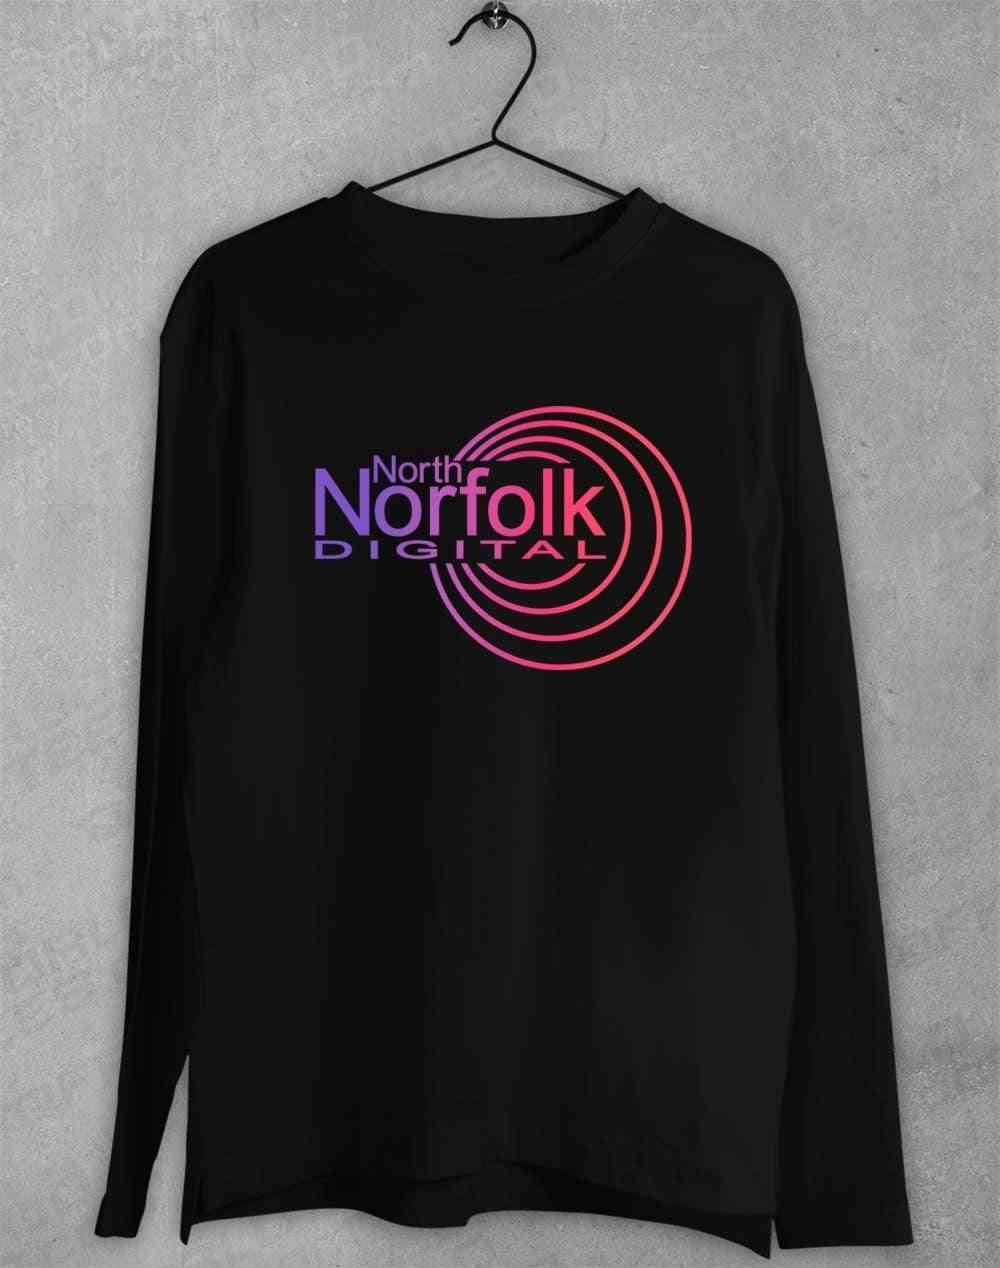 North Norfolk Digital Long Sleeve T-Shirt S / Black  - Off World Tees